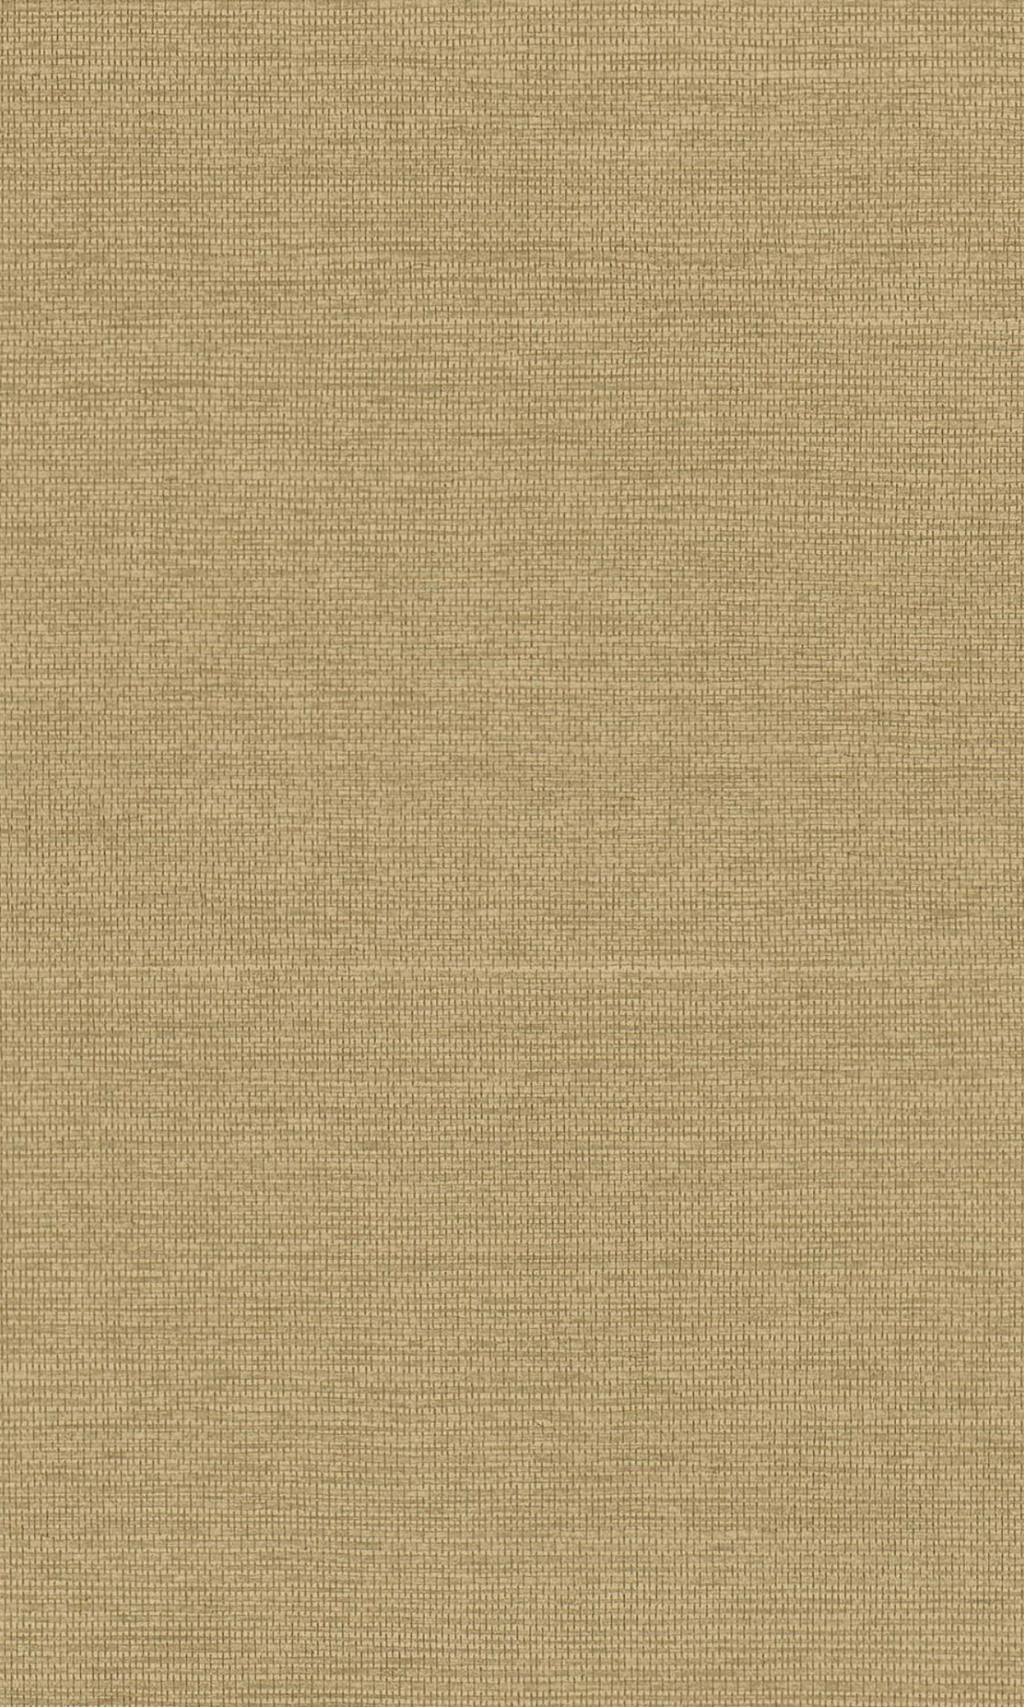 Brown Minimalist Weave Textured Commercial Wallpaper C7253